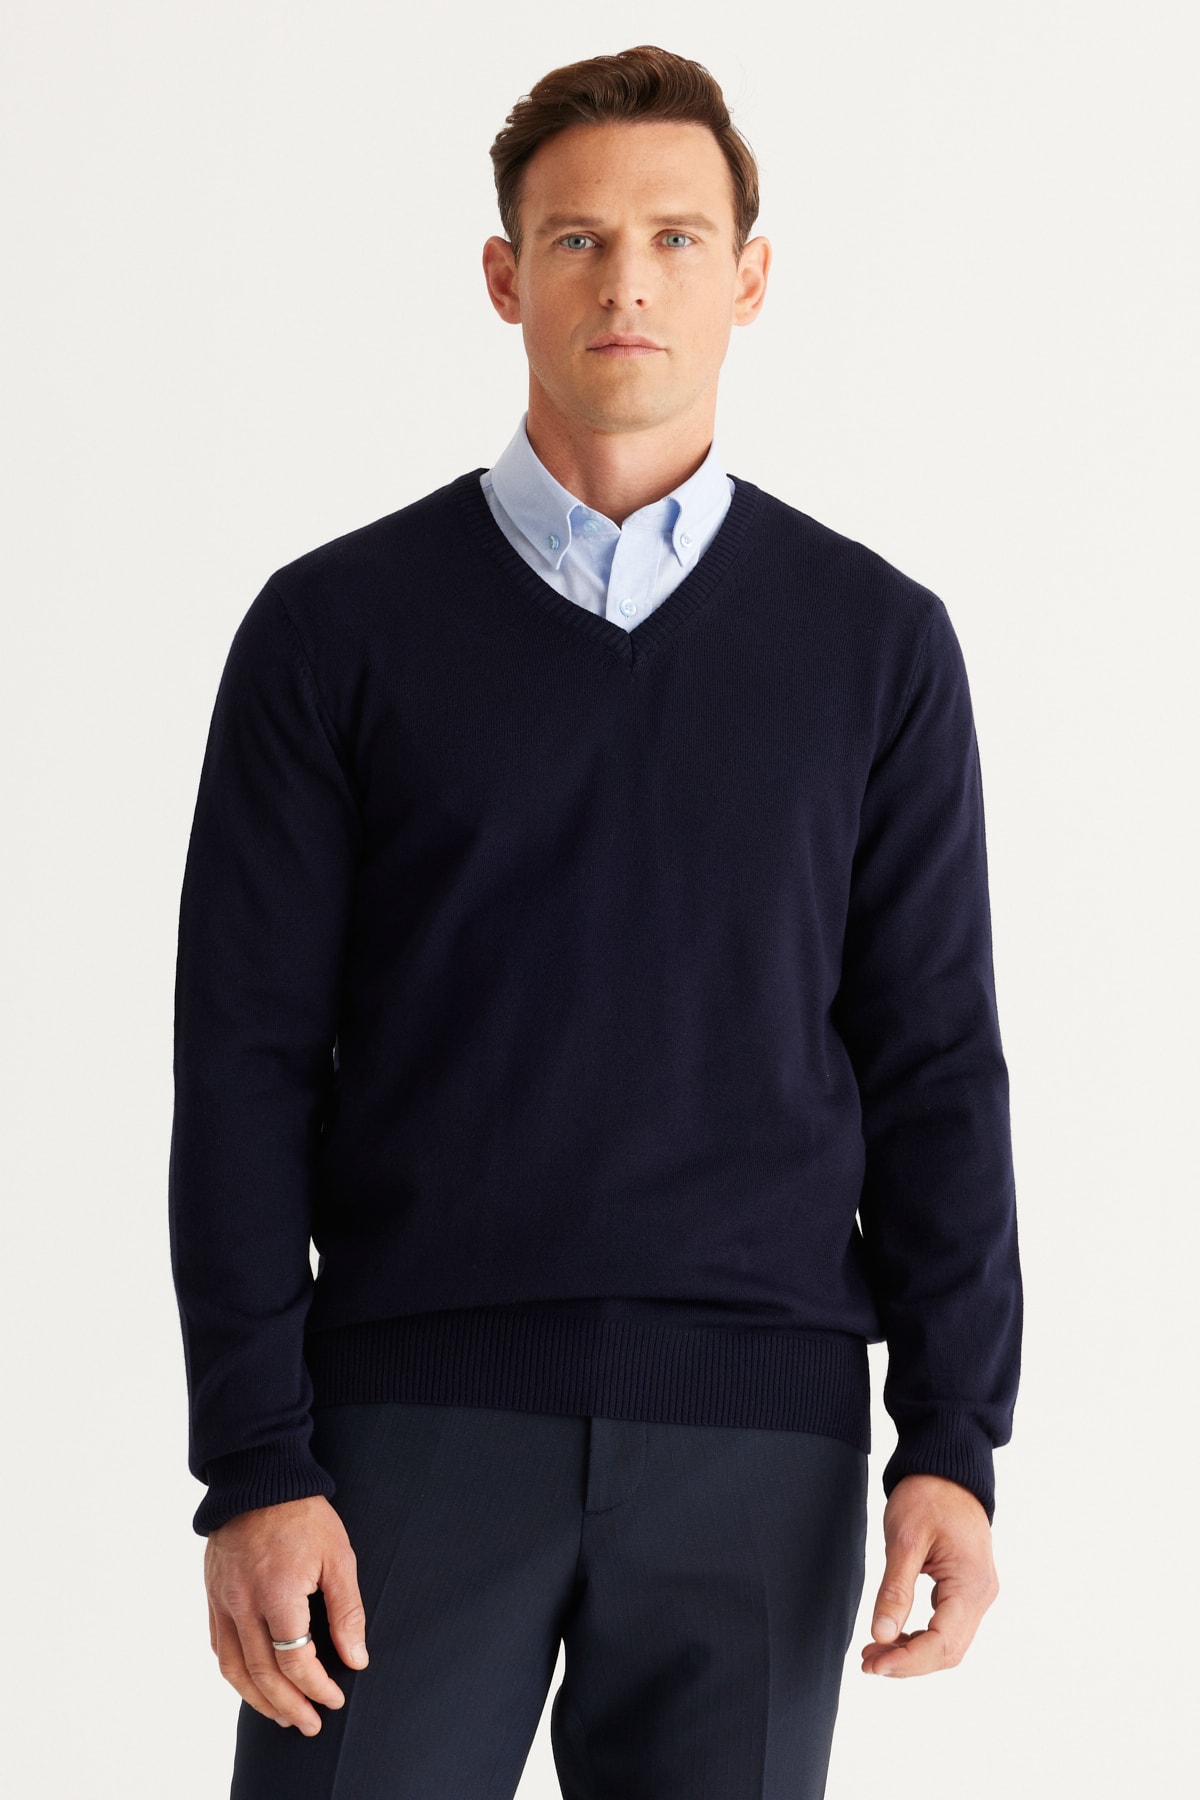 ALTINYILDIZ CLASSICS Men's Navy Blue Standard Fit Normal Cut V-Neck Knitwear Sweater.